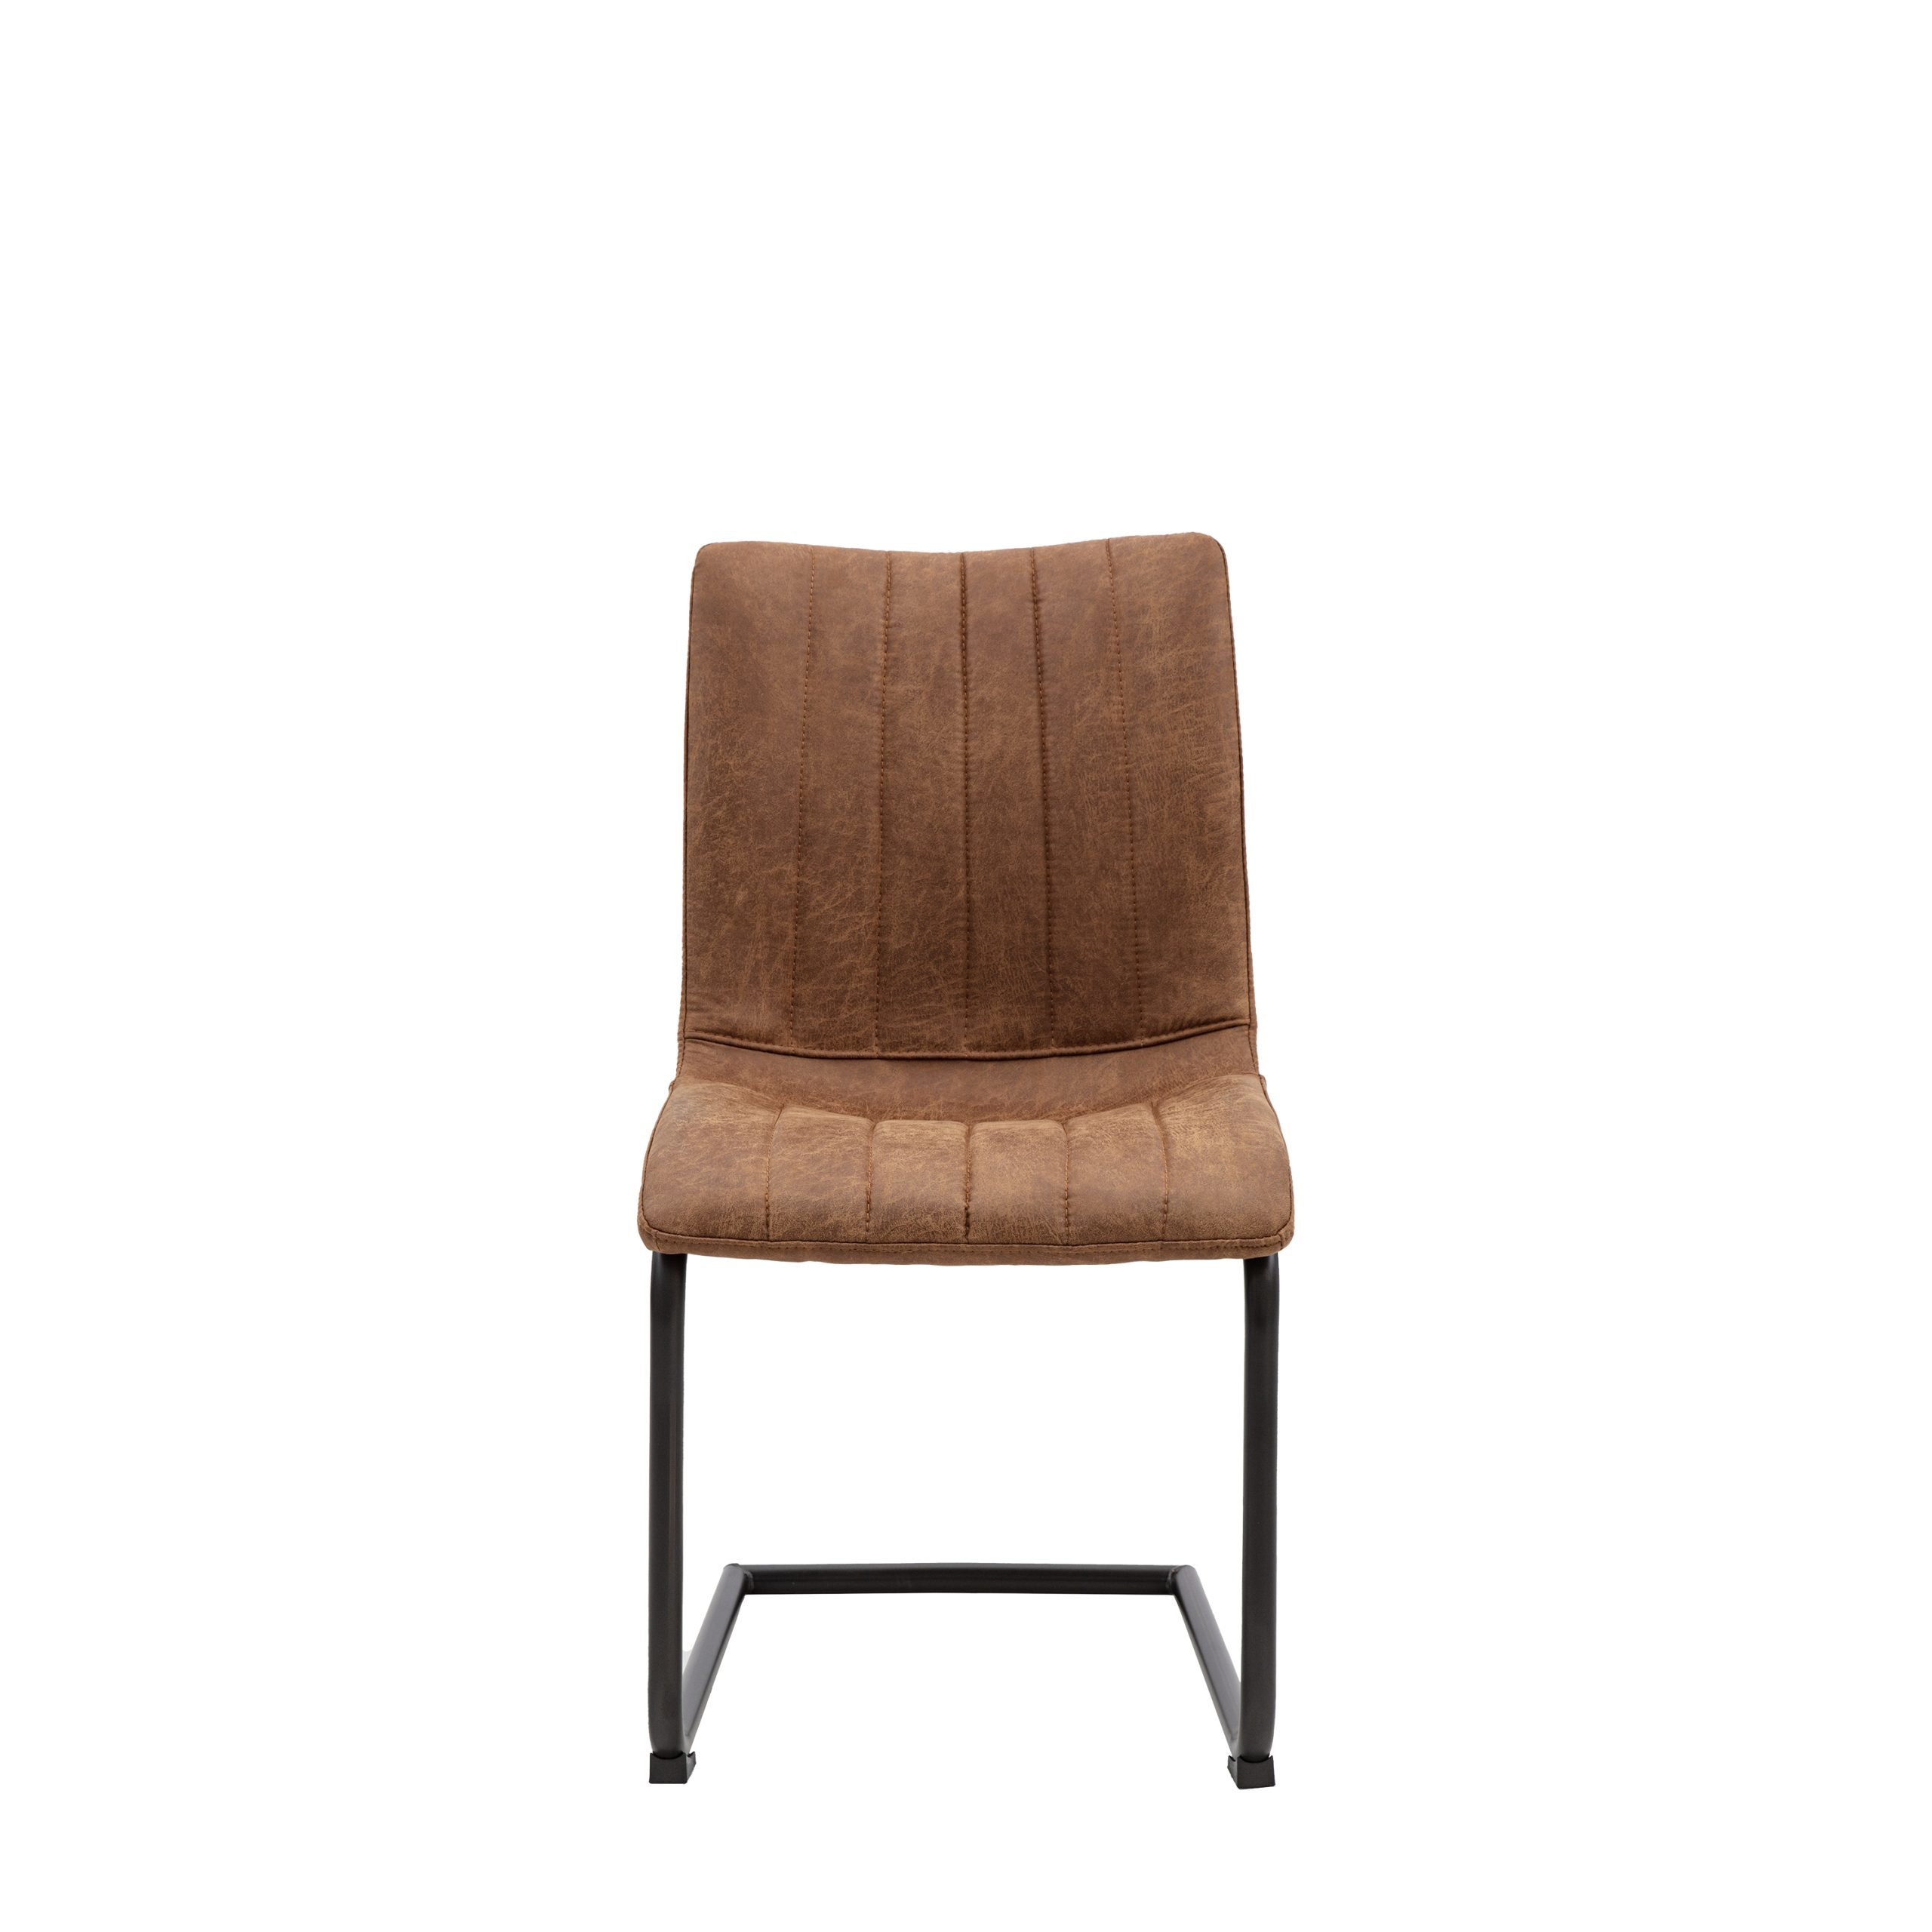 Gallery Direct Edington Brown Chair (Set of 2)